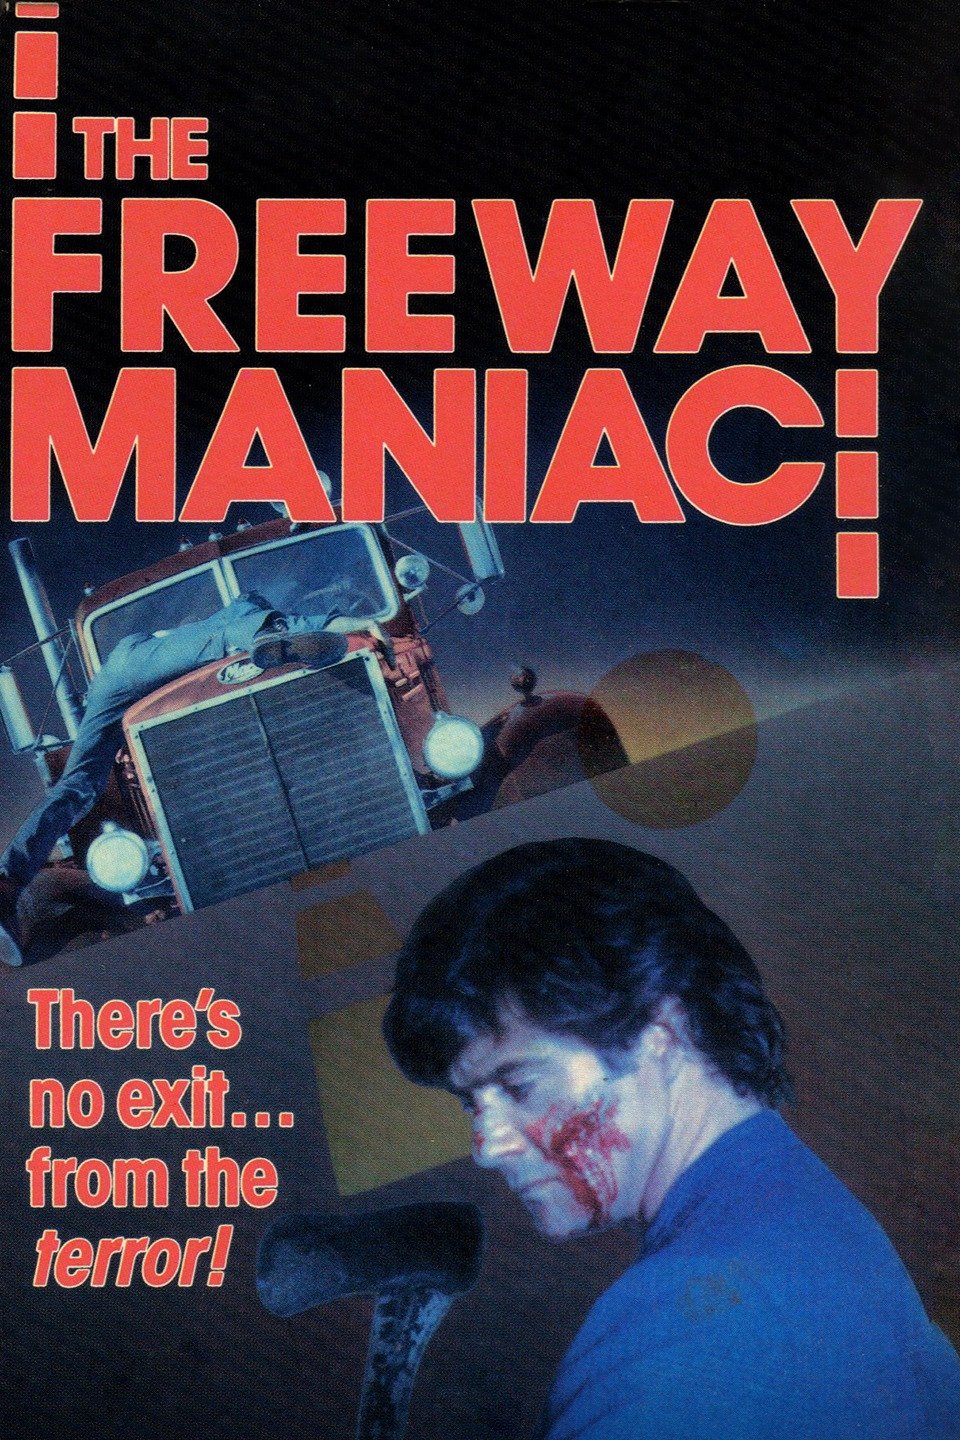 The Freeway Maniac (1989) Screenshot 2 